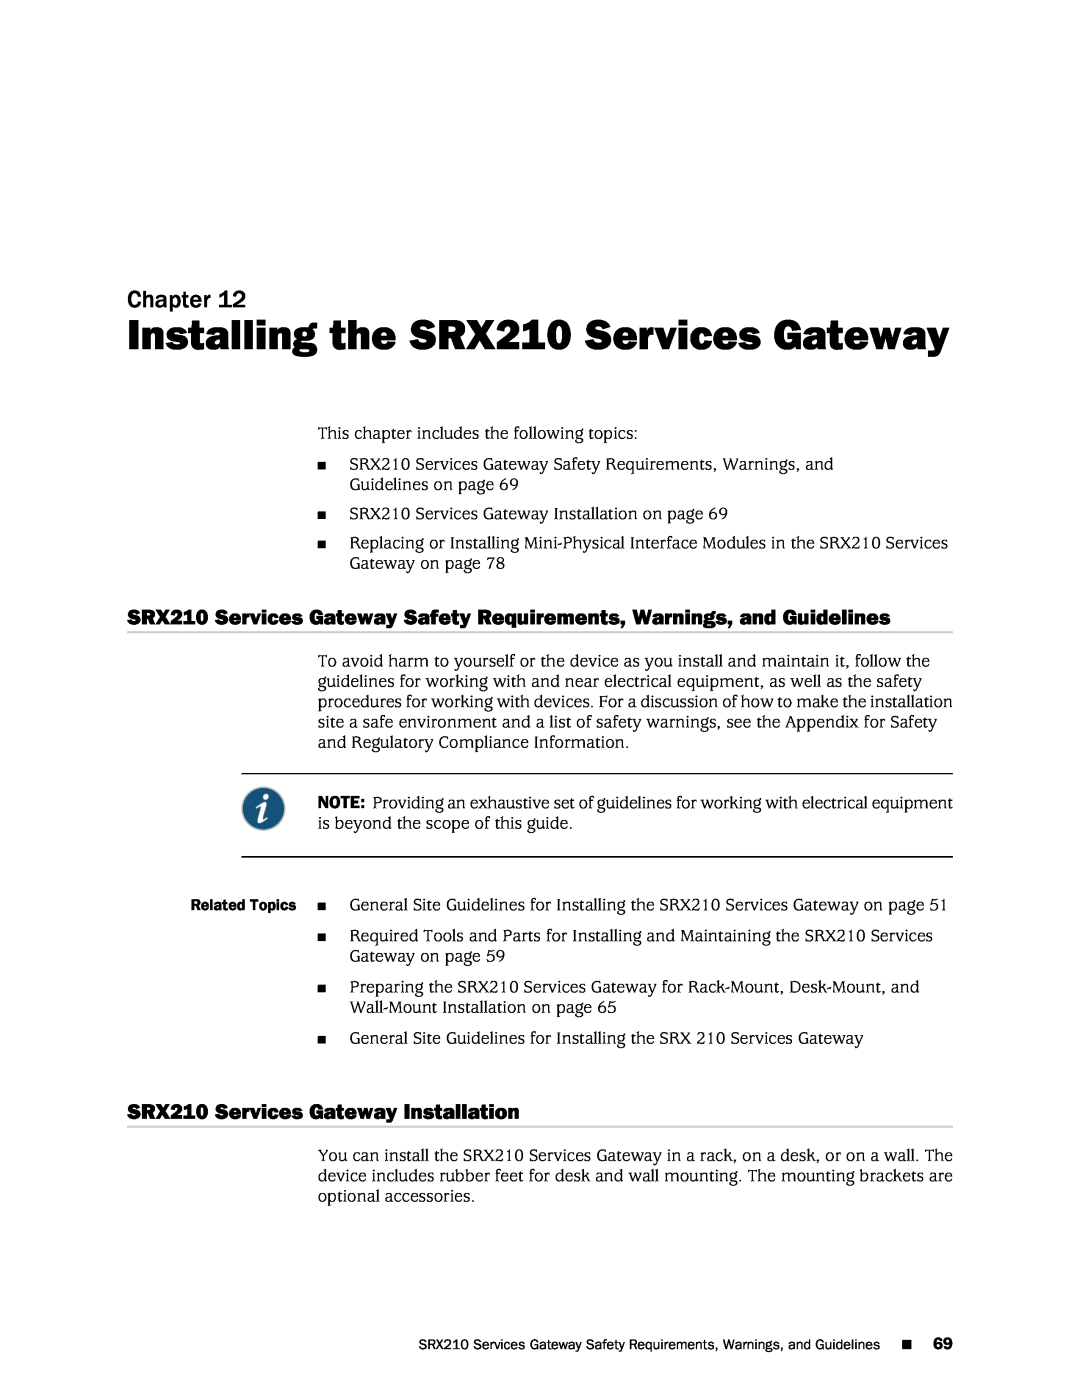 Juniper Networks SRX 210 manual Installing the SRX210 Services Gateway, SRX210 Services Gateway Installation, Chapter 